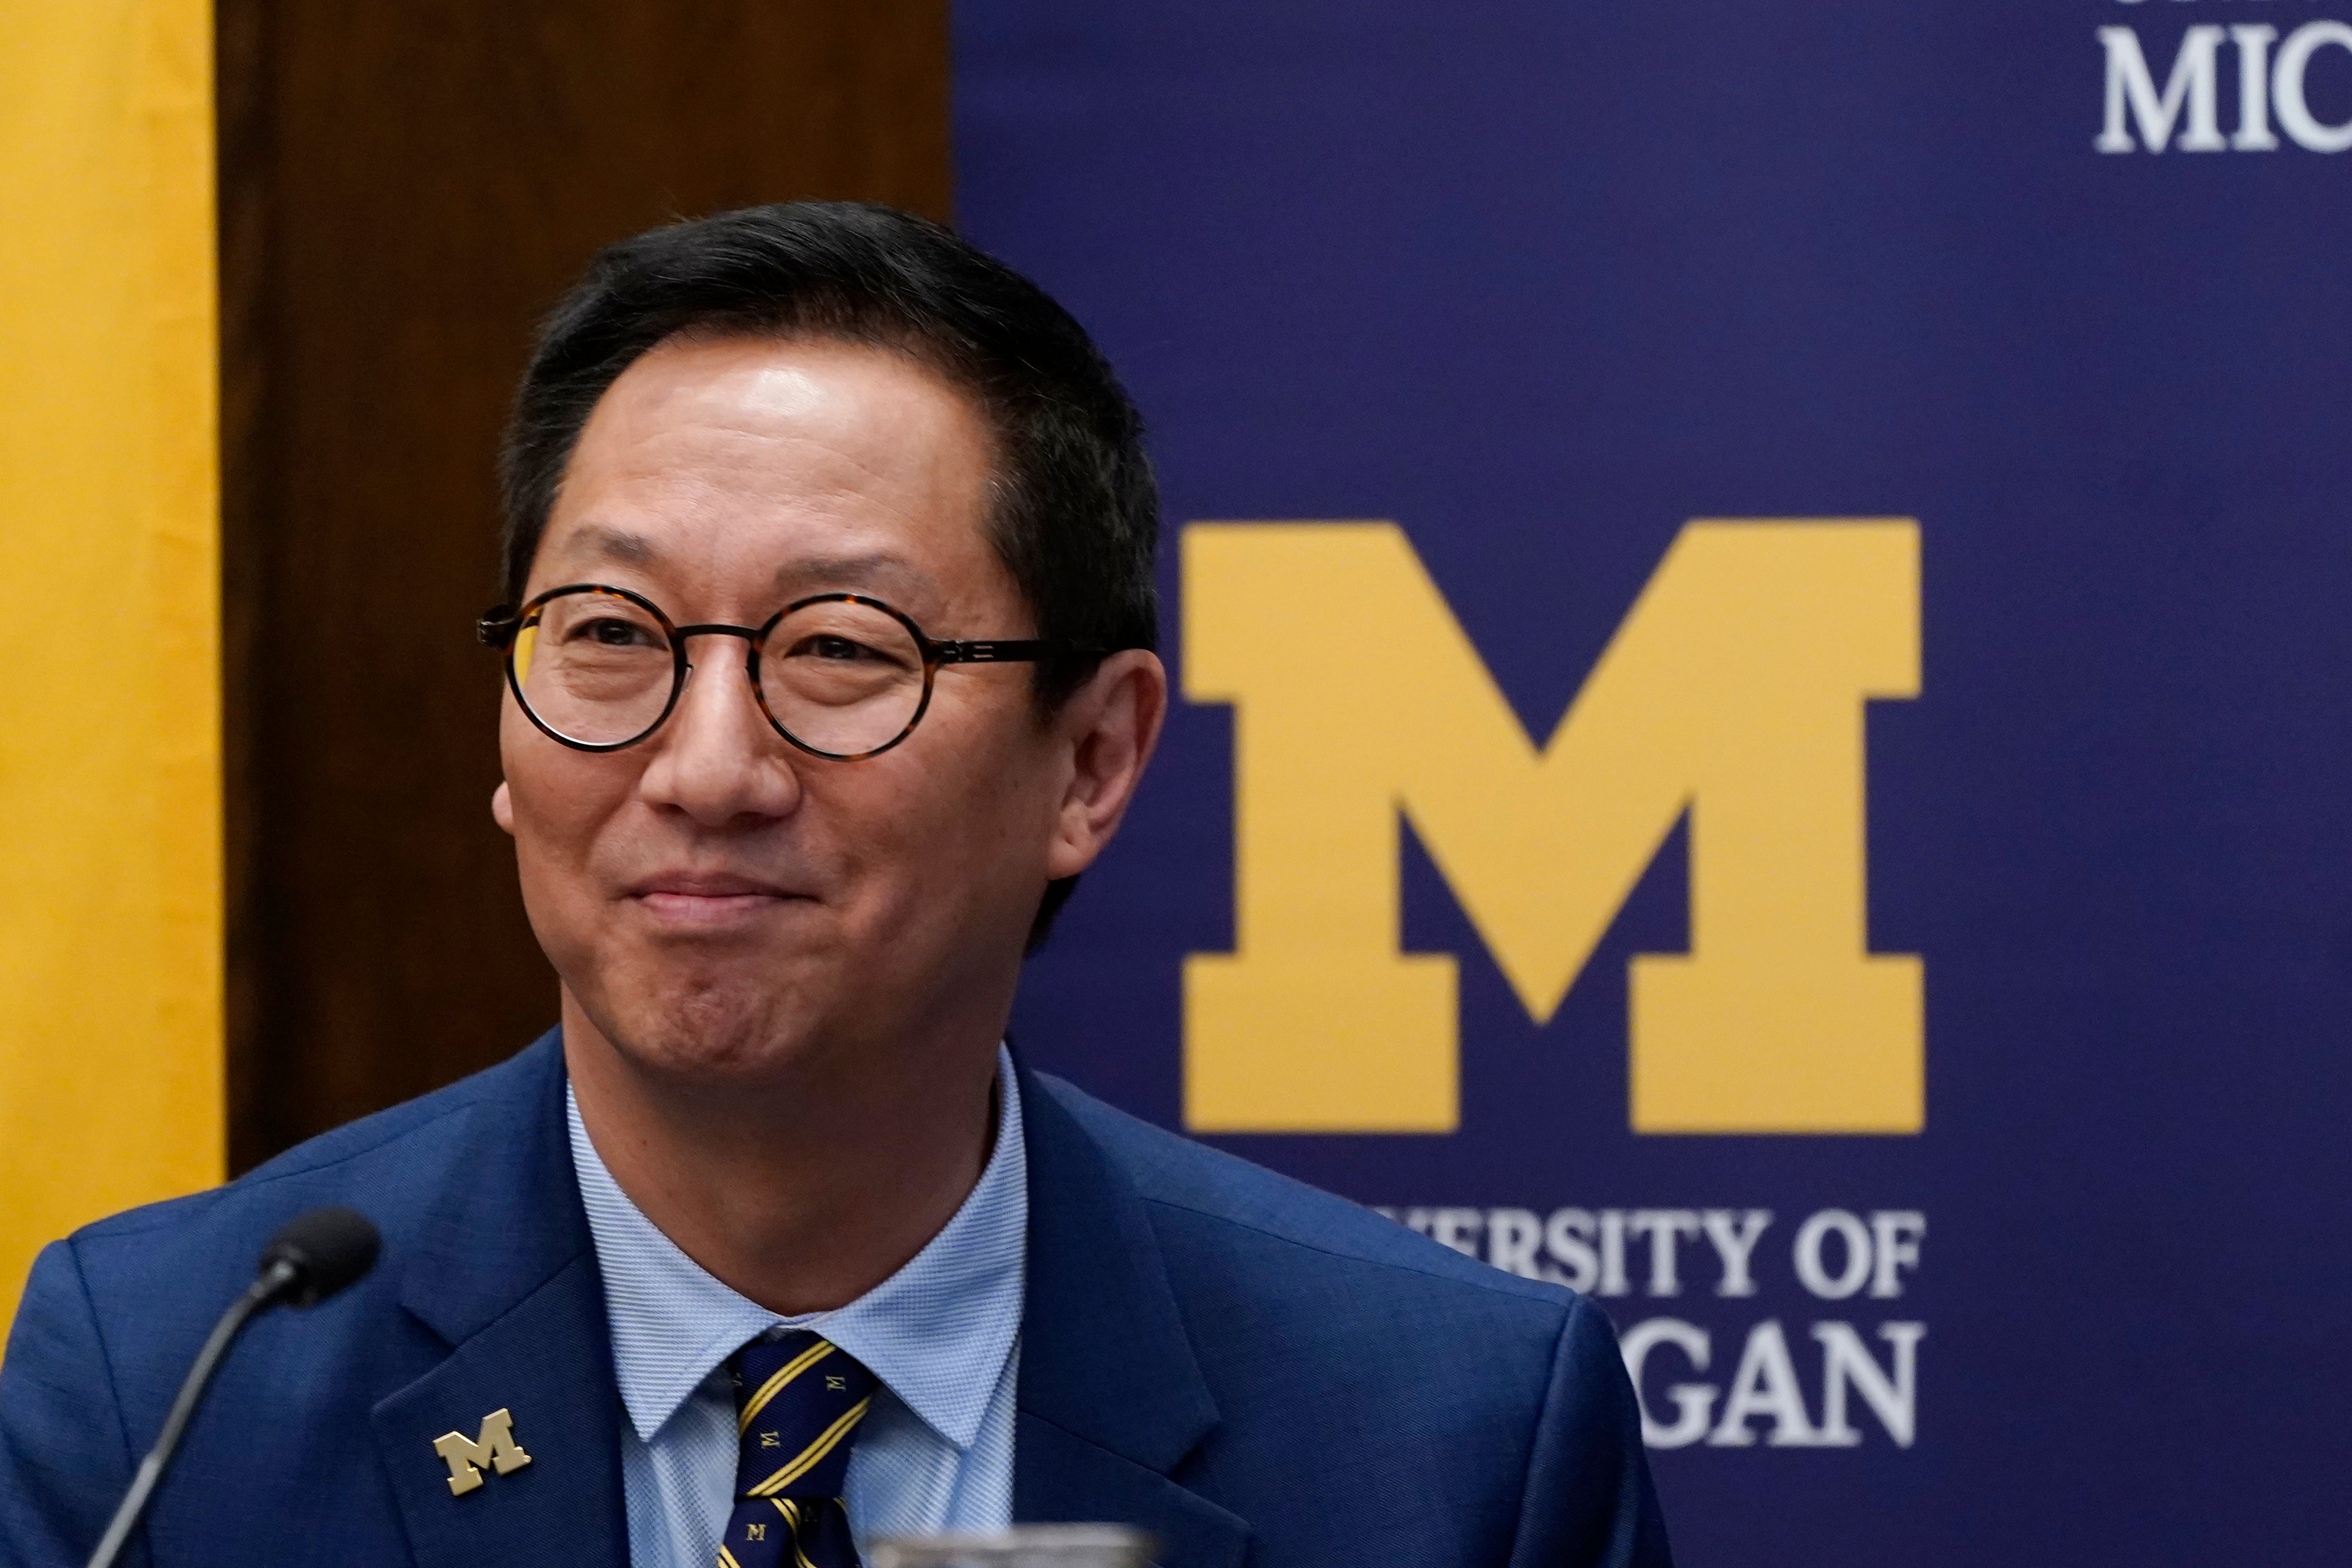 University of Michigan New President